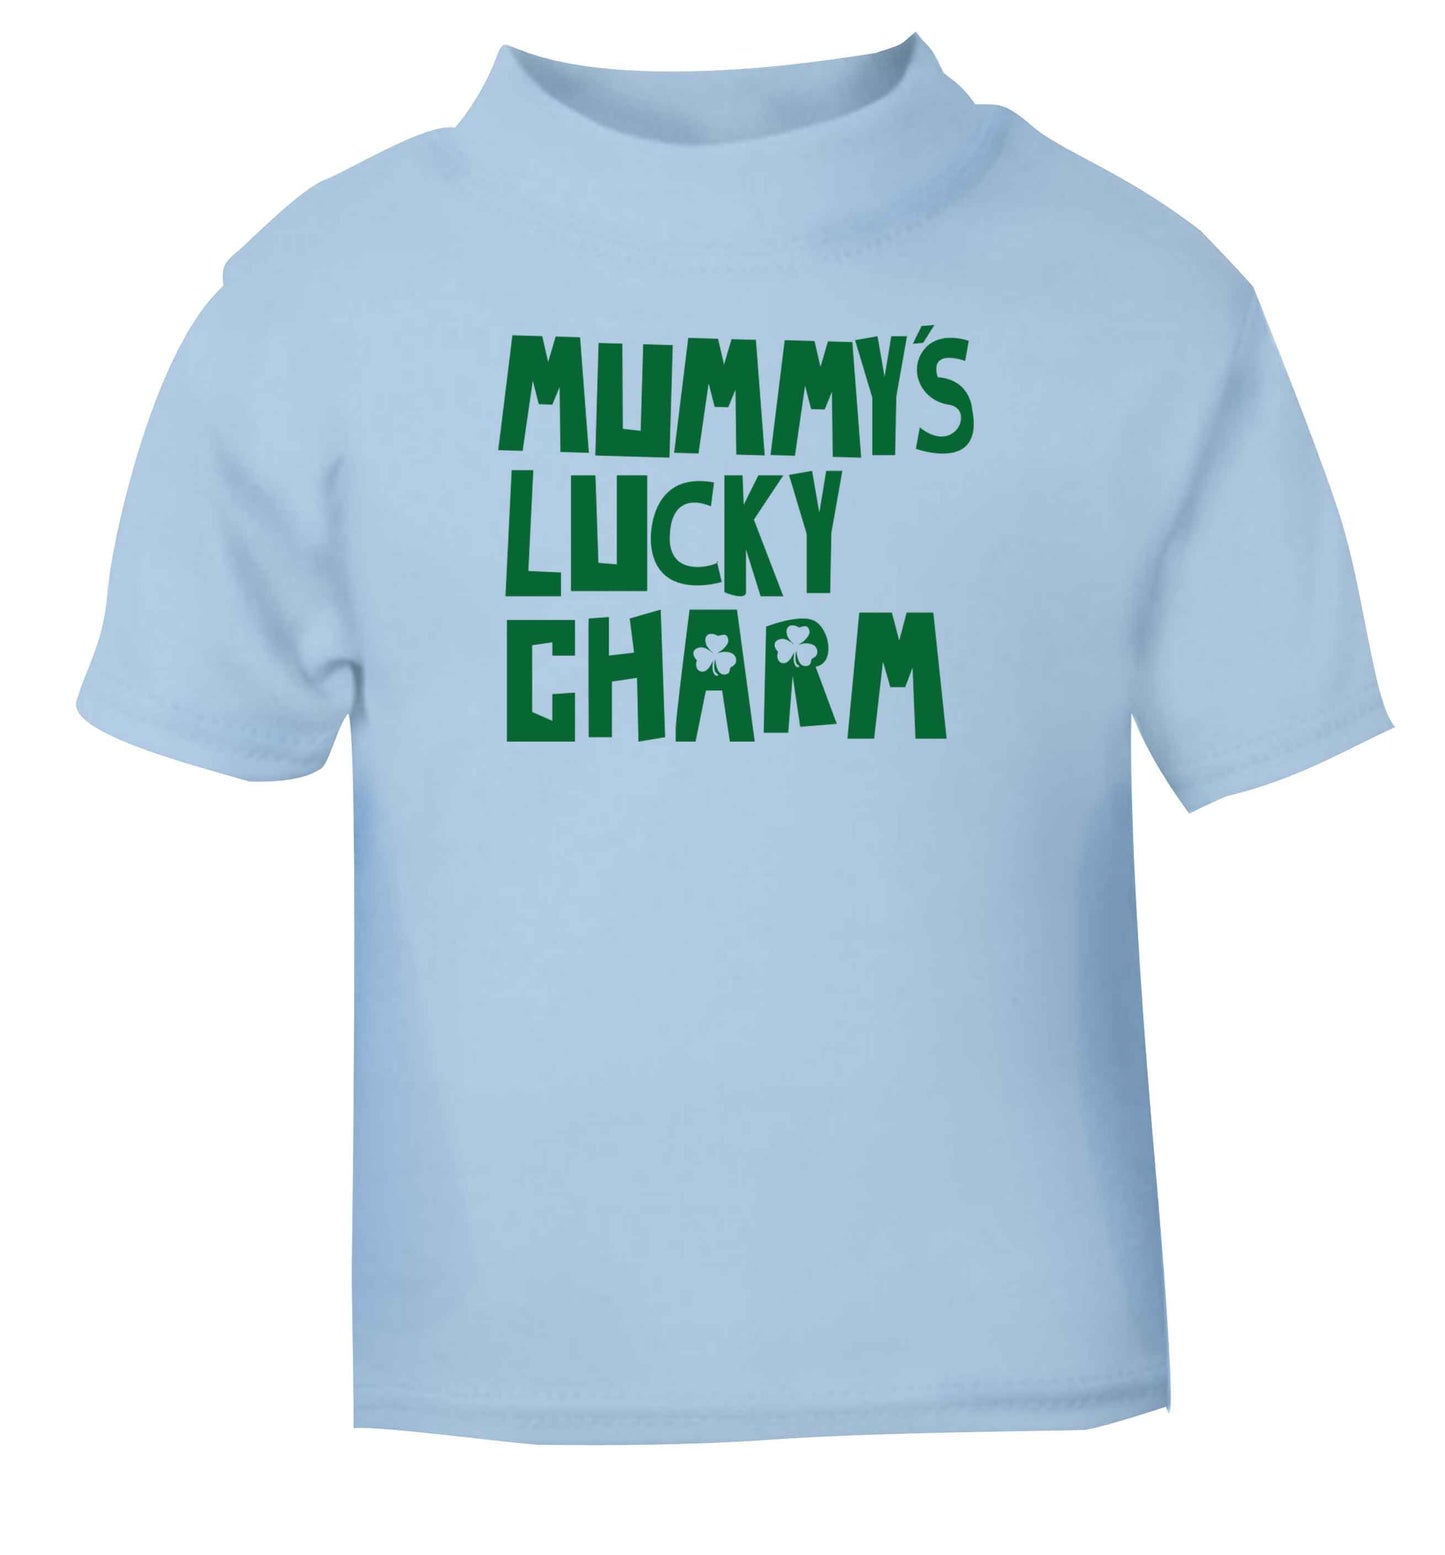 Mummy's lucky charm light blue baby toddler Tshirt 2 Years